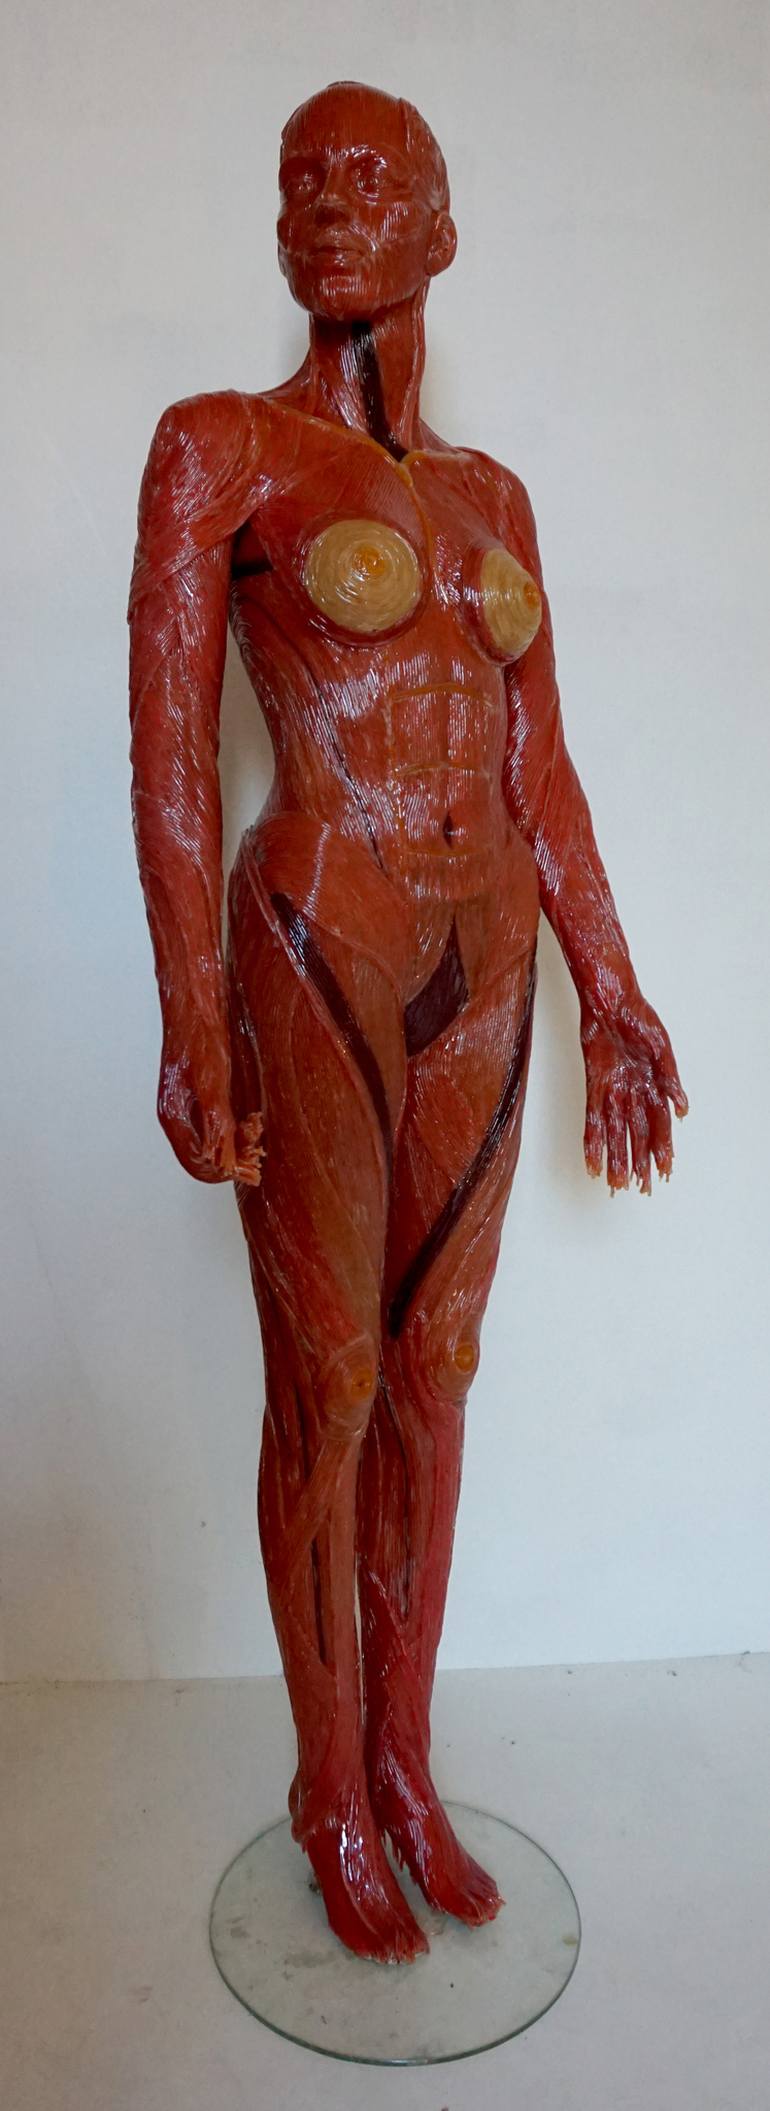 Original Body Sculpture by Marit Otto